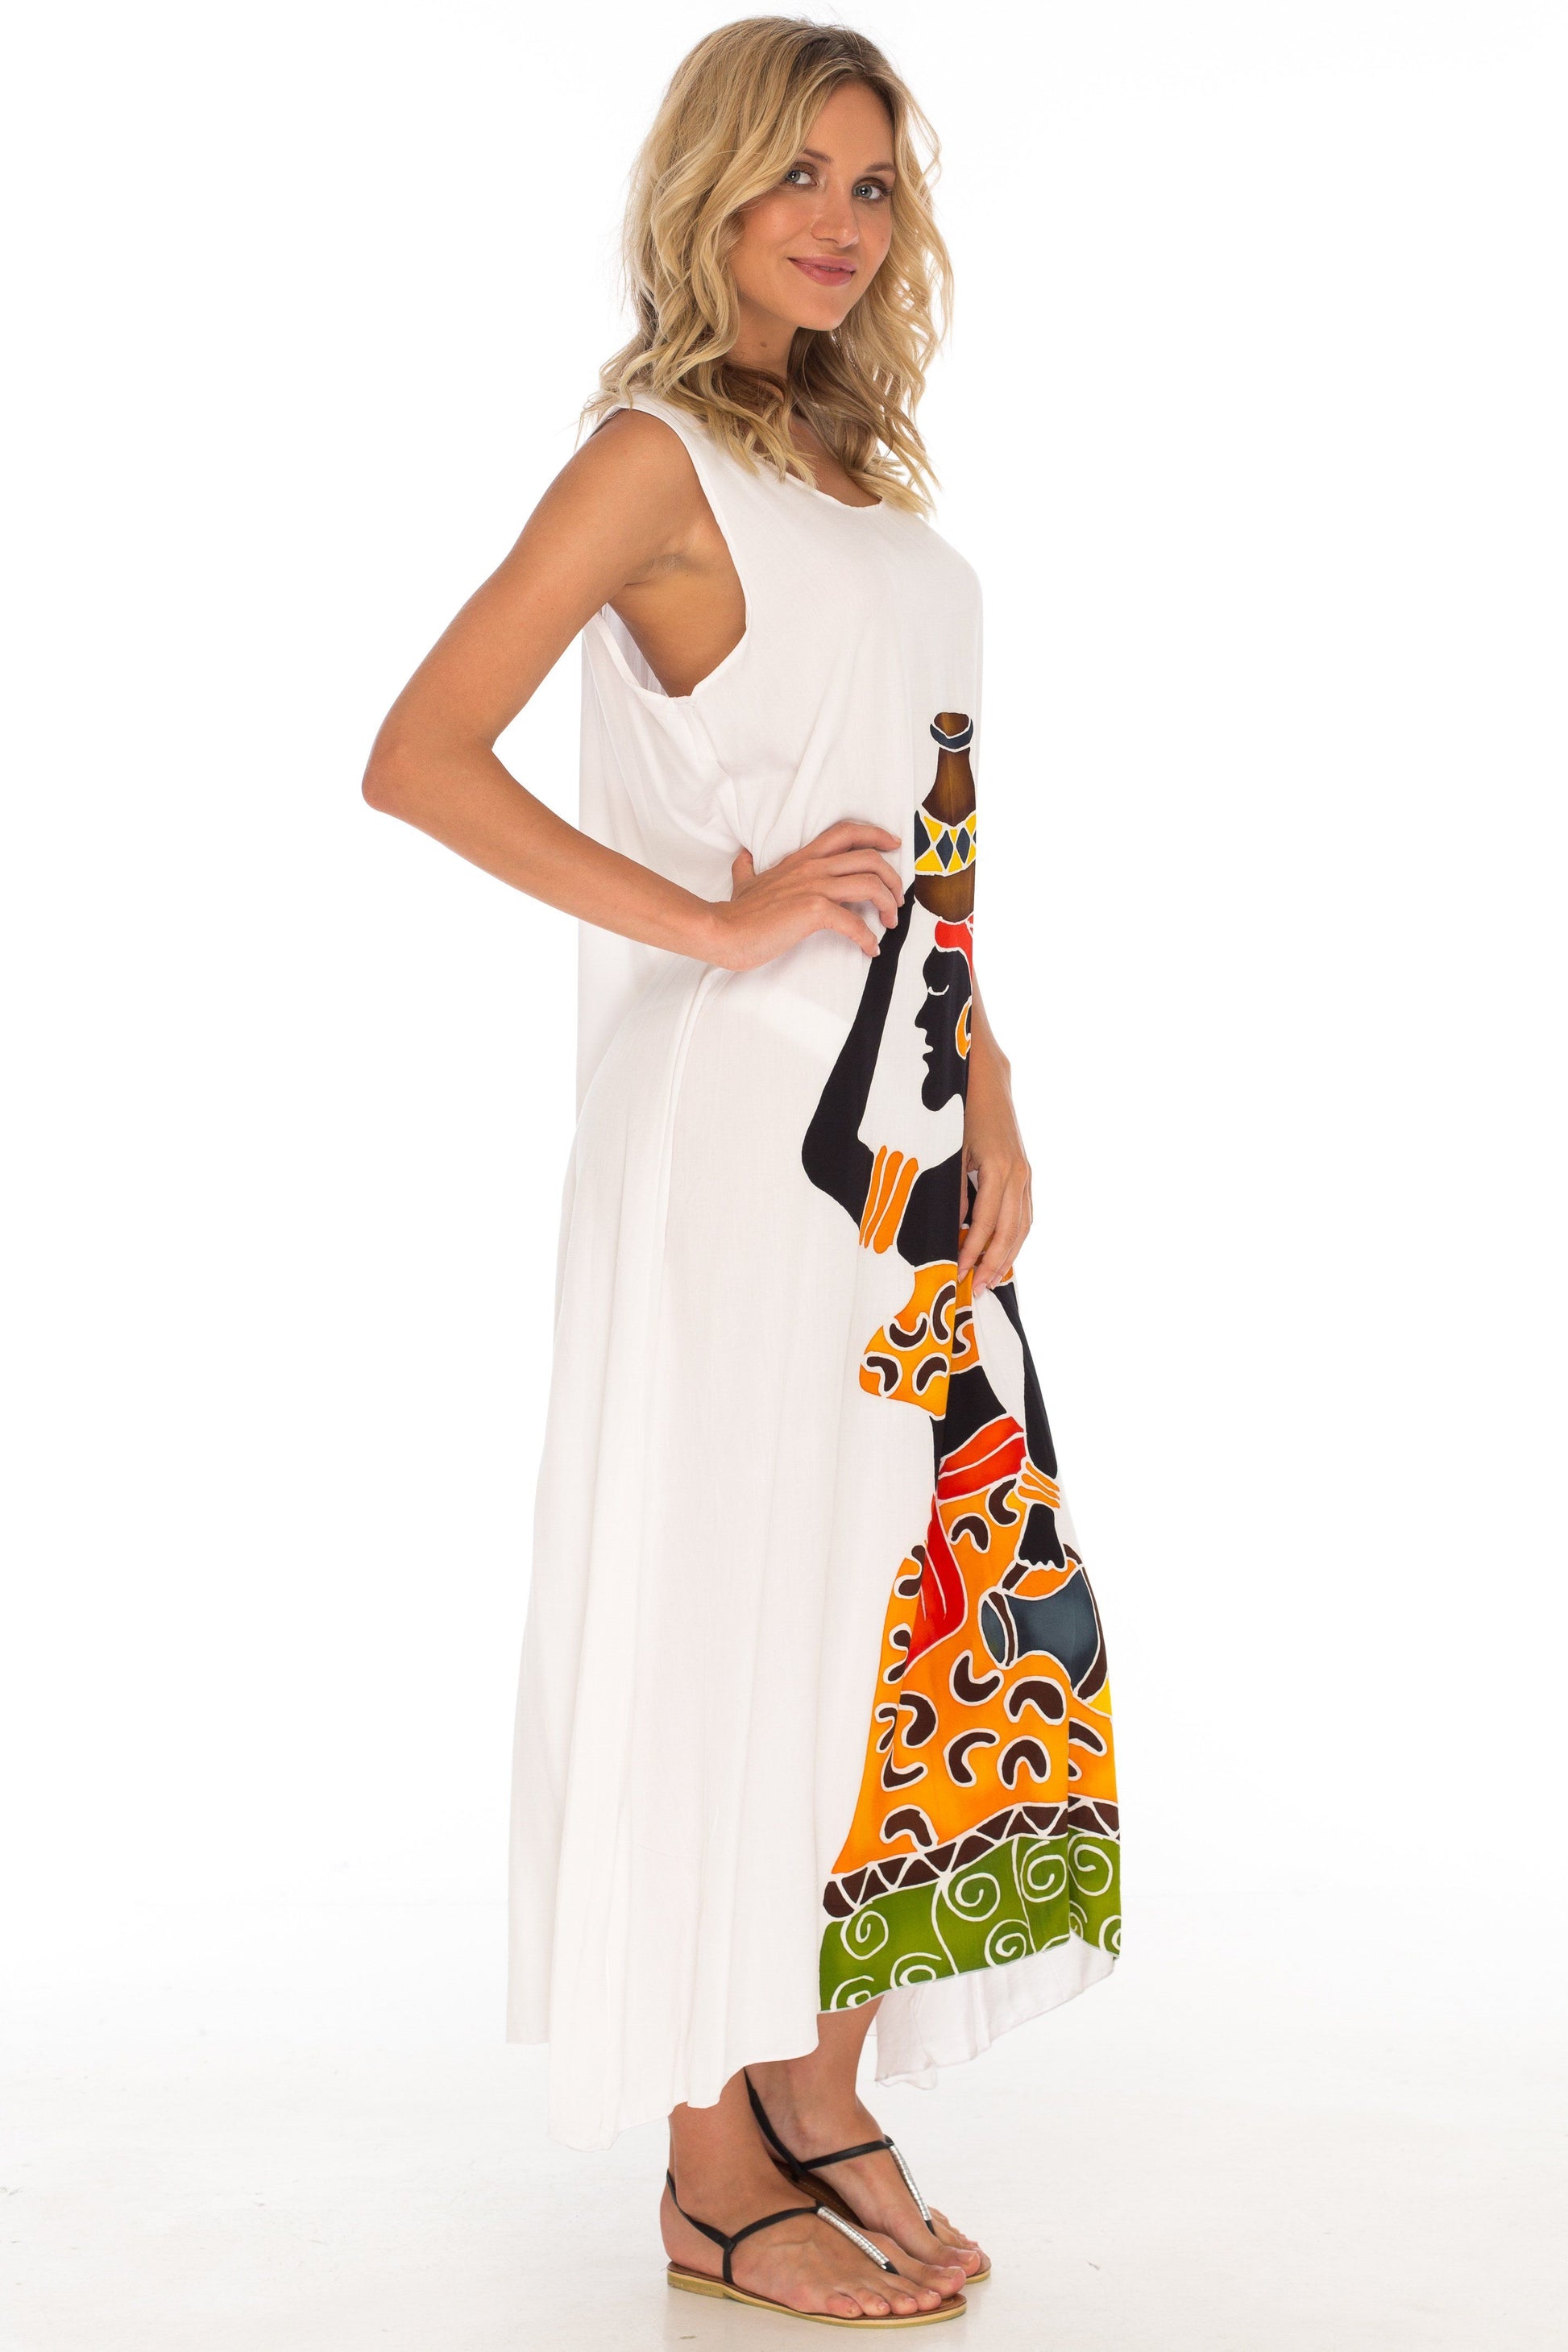 Sleeveless Summer Tank Dress with Hand-painted Tribal Design - Love-ShuShi-white dress-Shu-Shi